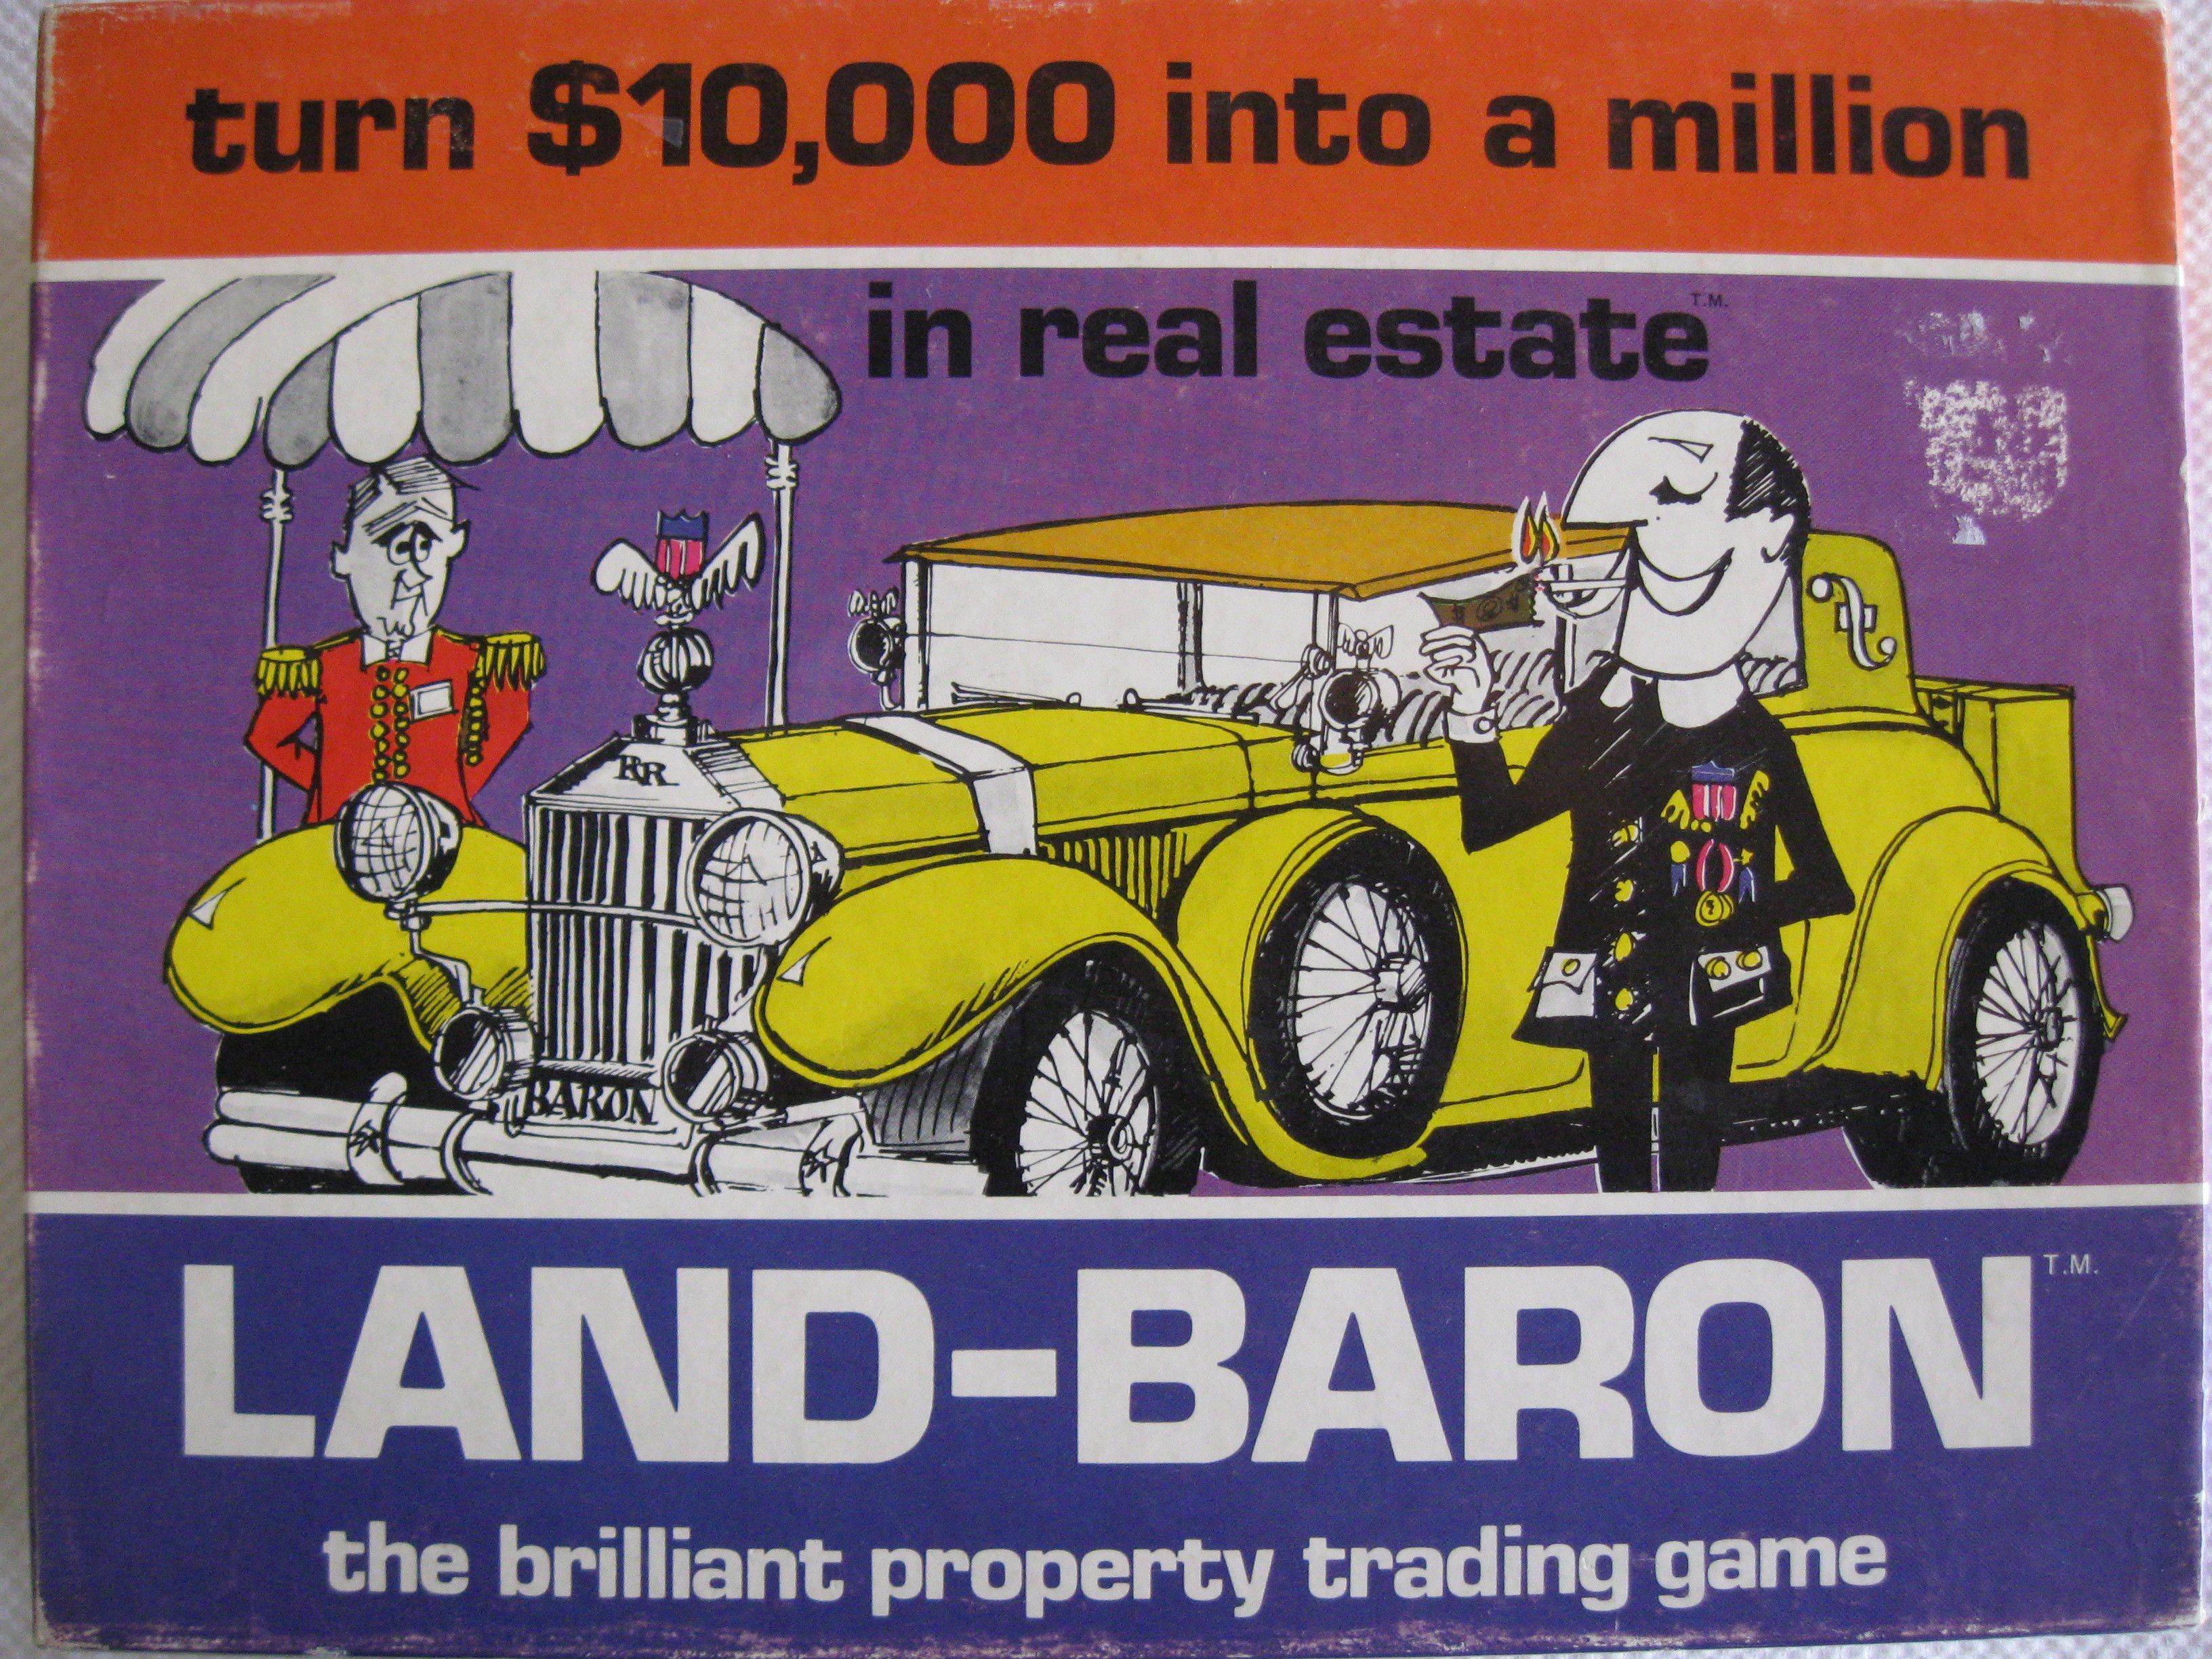 Land-Baron